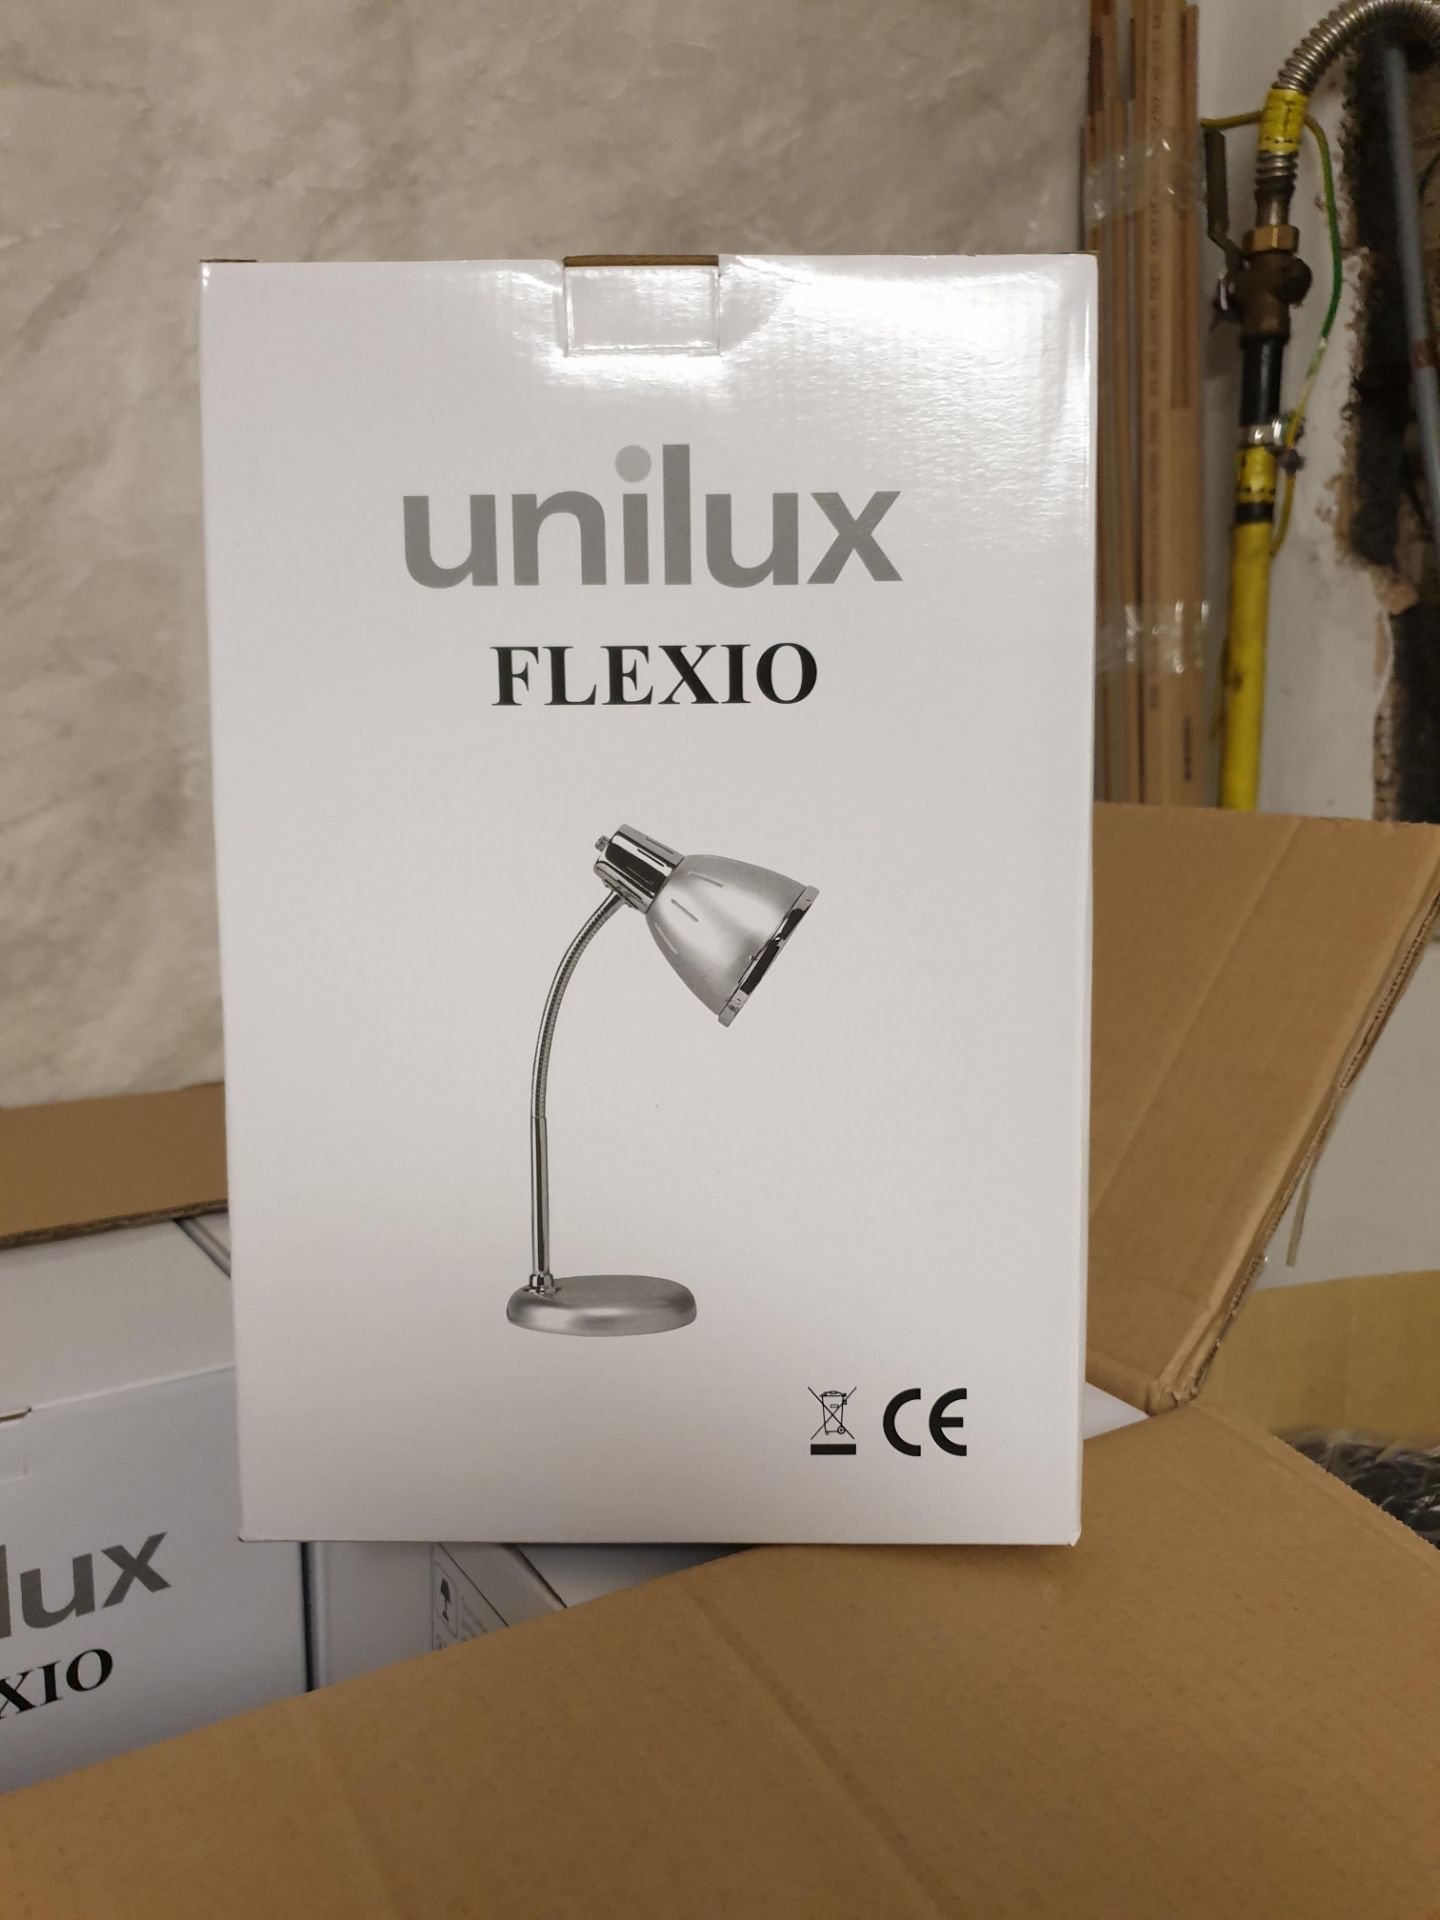 6 X Unilux Flexio Ulx Led Metal Desk Lamp